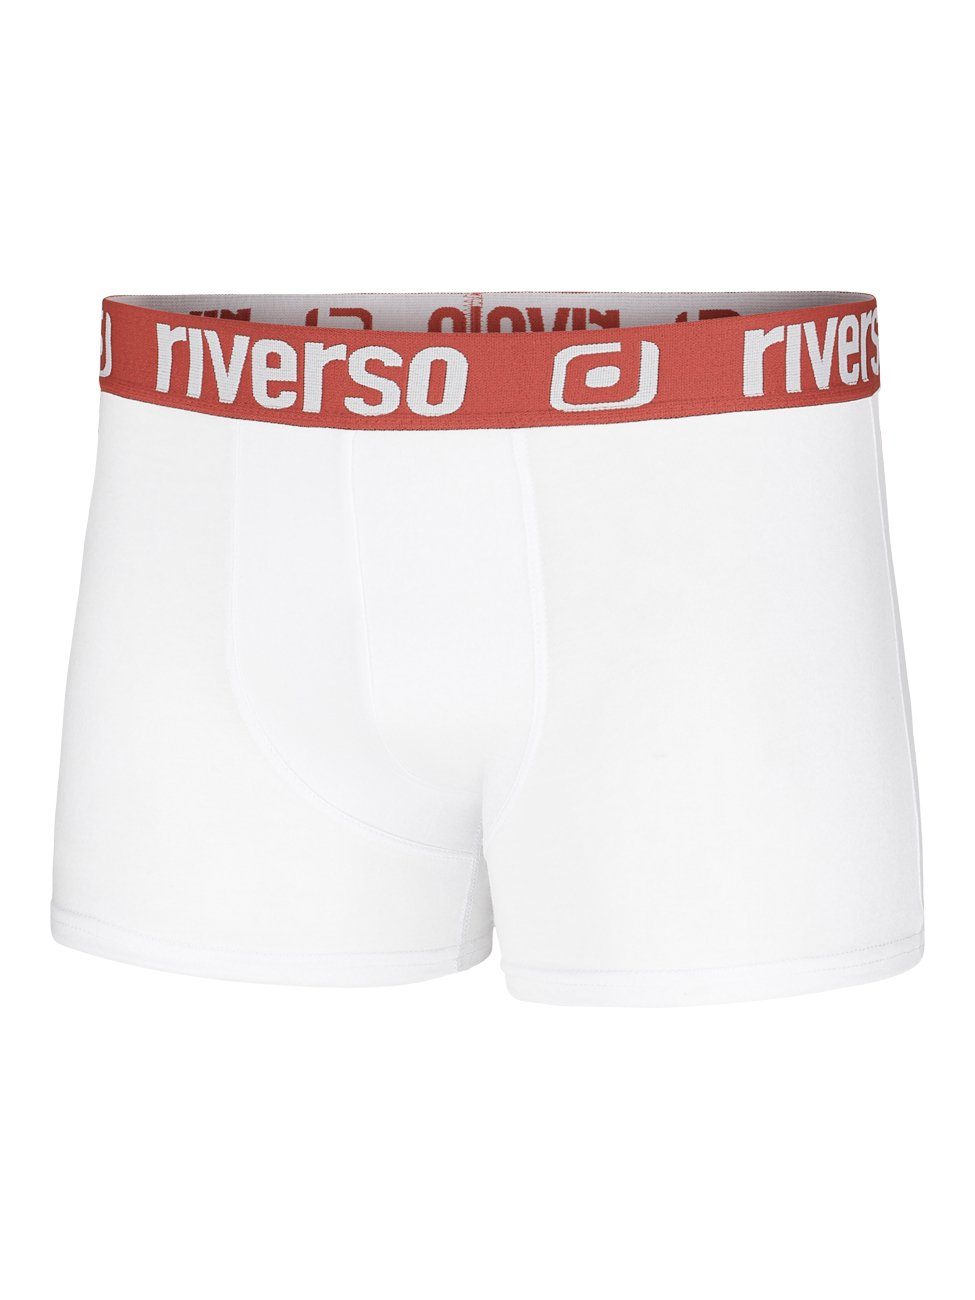 mit riverso RVS/1/BCX5/R5 RIVHarry R5) Stretch (5-St) Boxershorts (Farbmix